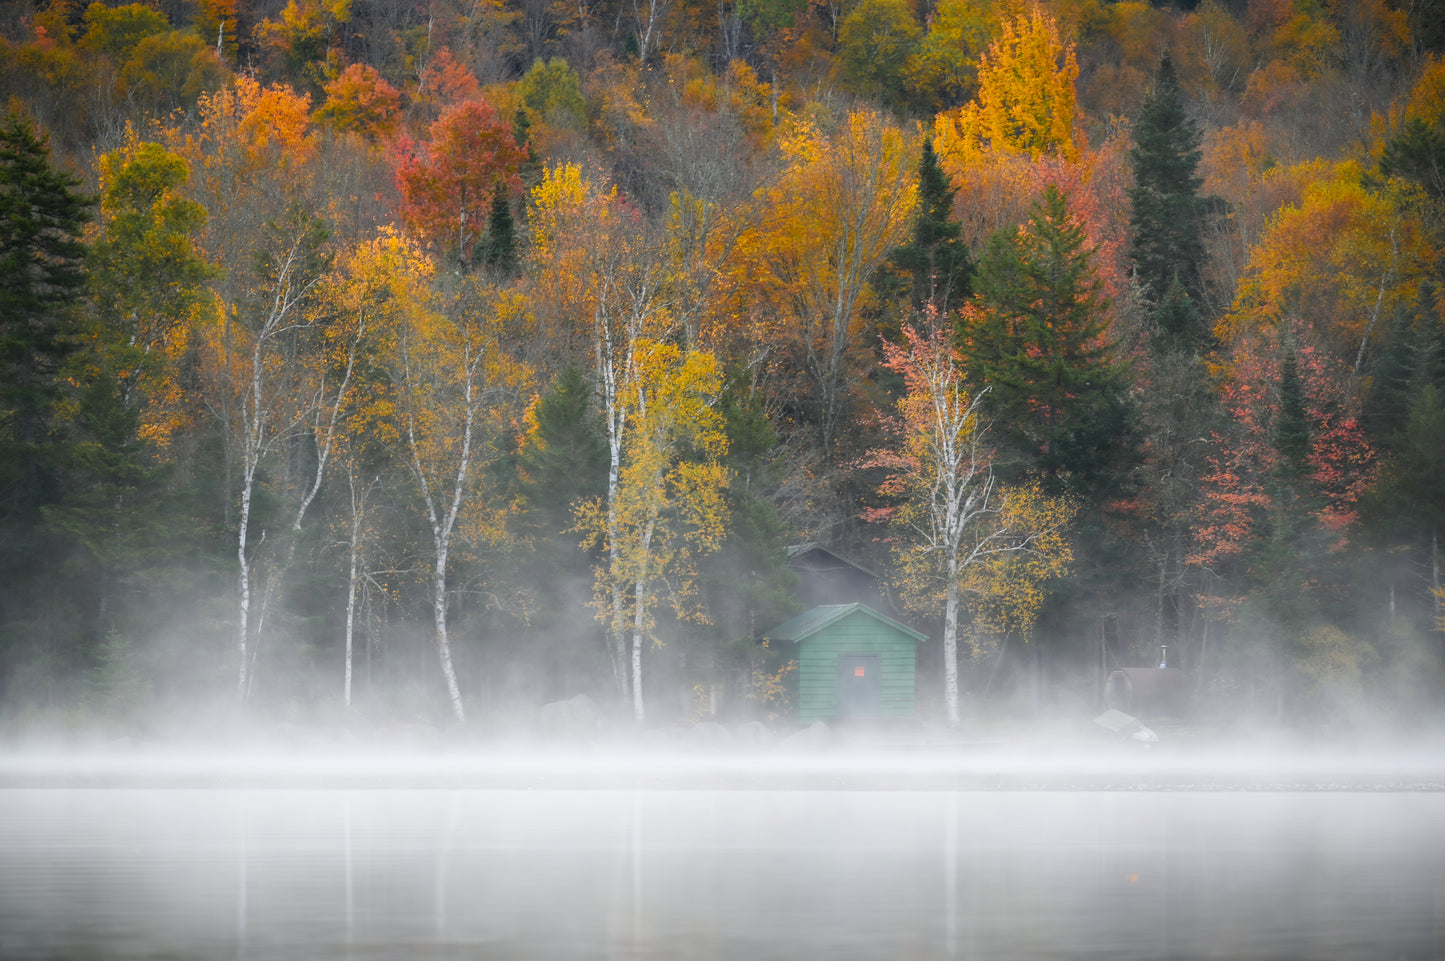 Misty Morning Light Adirondack print